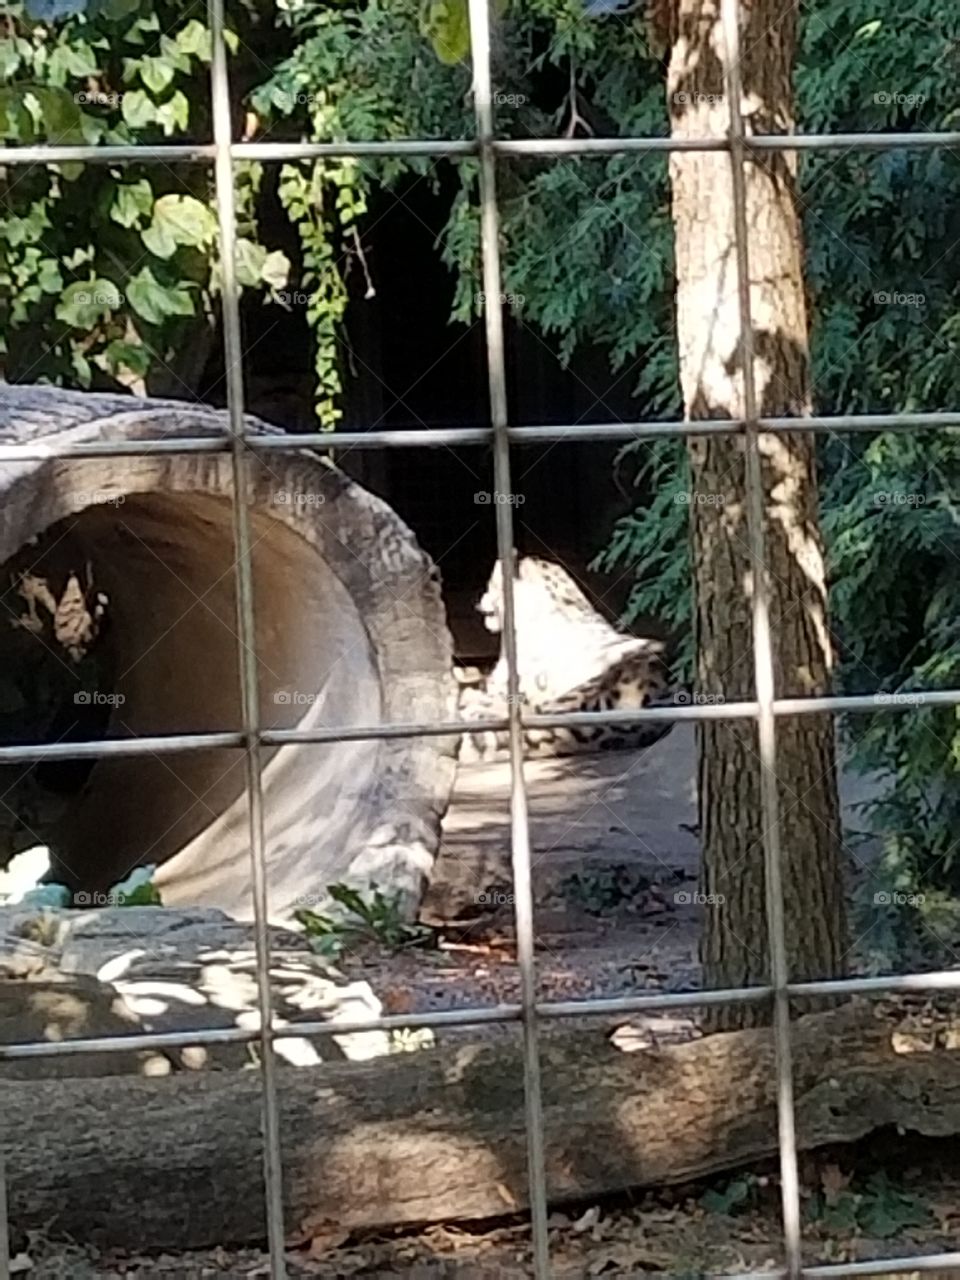 Lincoln park zoo trip